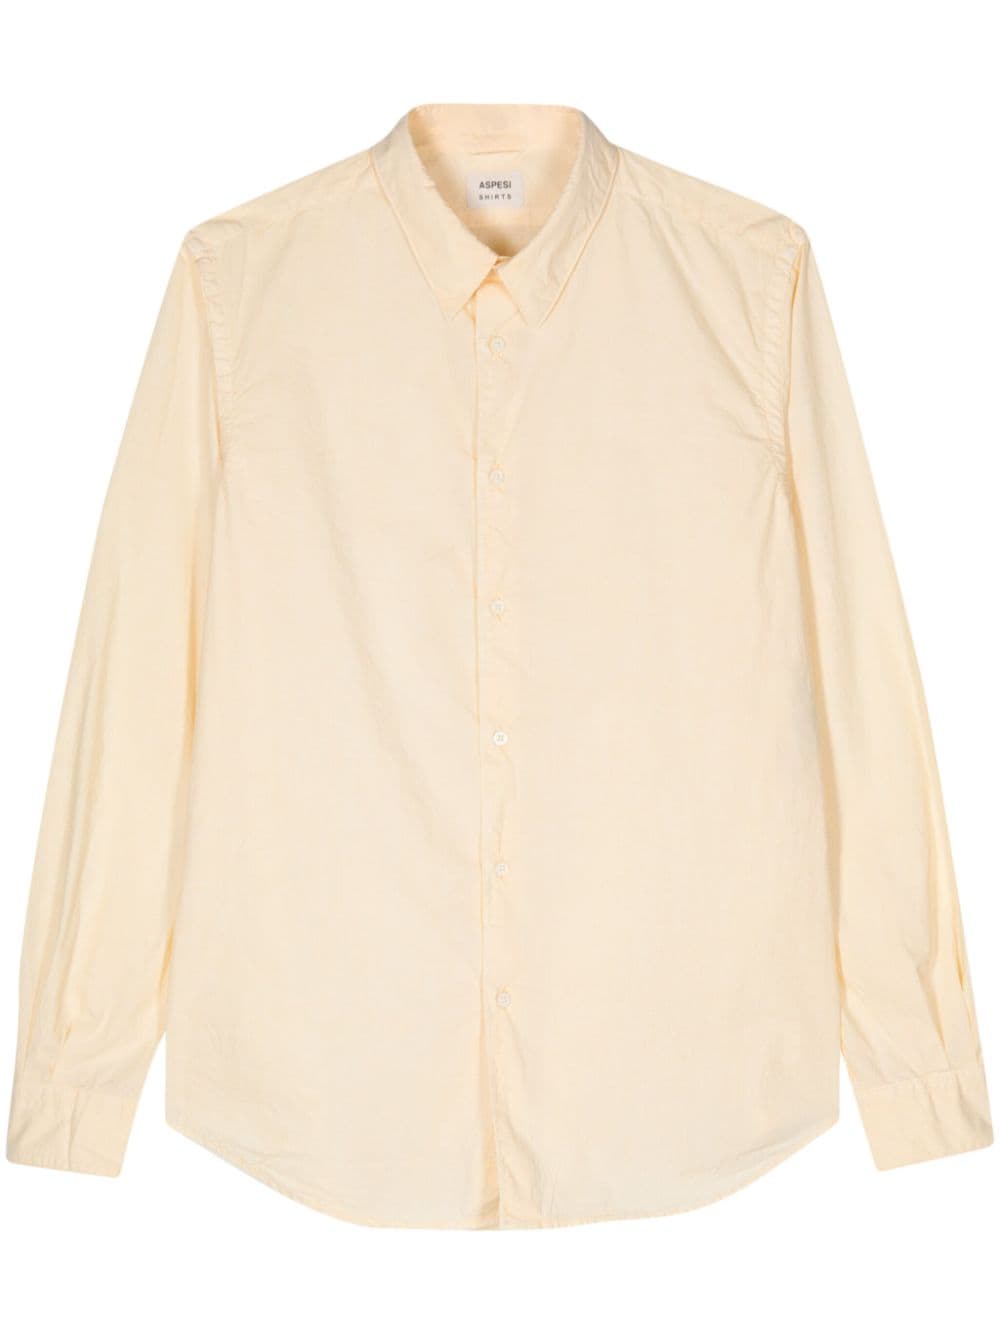 ASPESI tonal stitching poplin shirt - Yellow von ASPESI